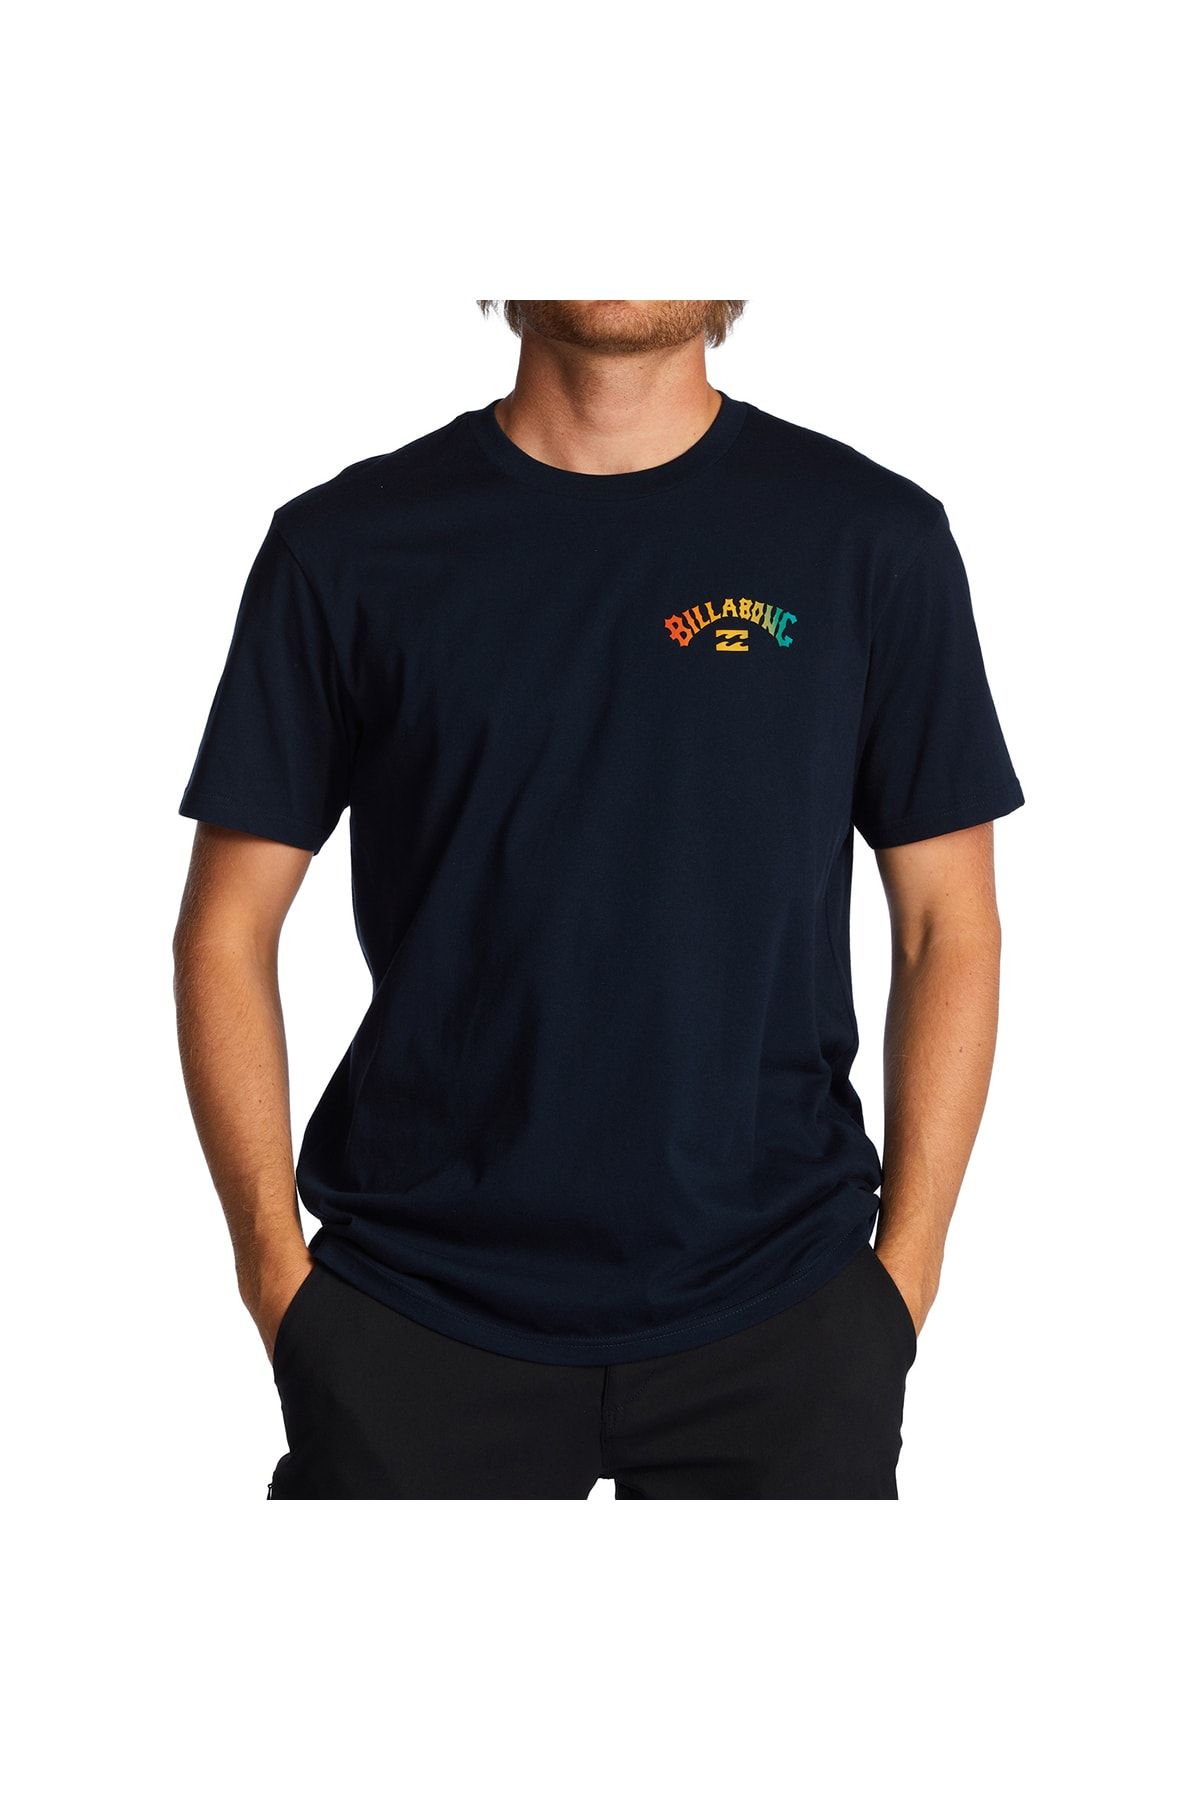 Billabong Arch Fill Ss Erkek Çok Renkli Günlük Stil T-shirt Abyzt01696-nvy